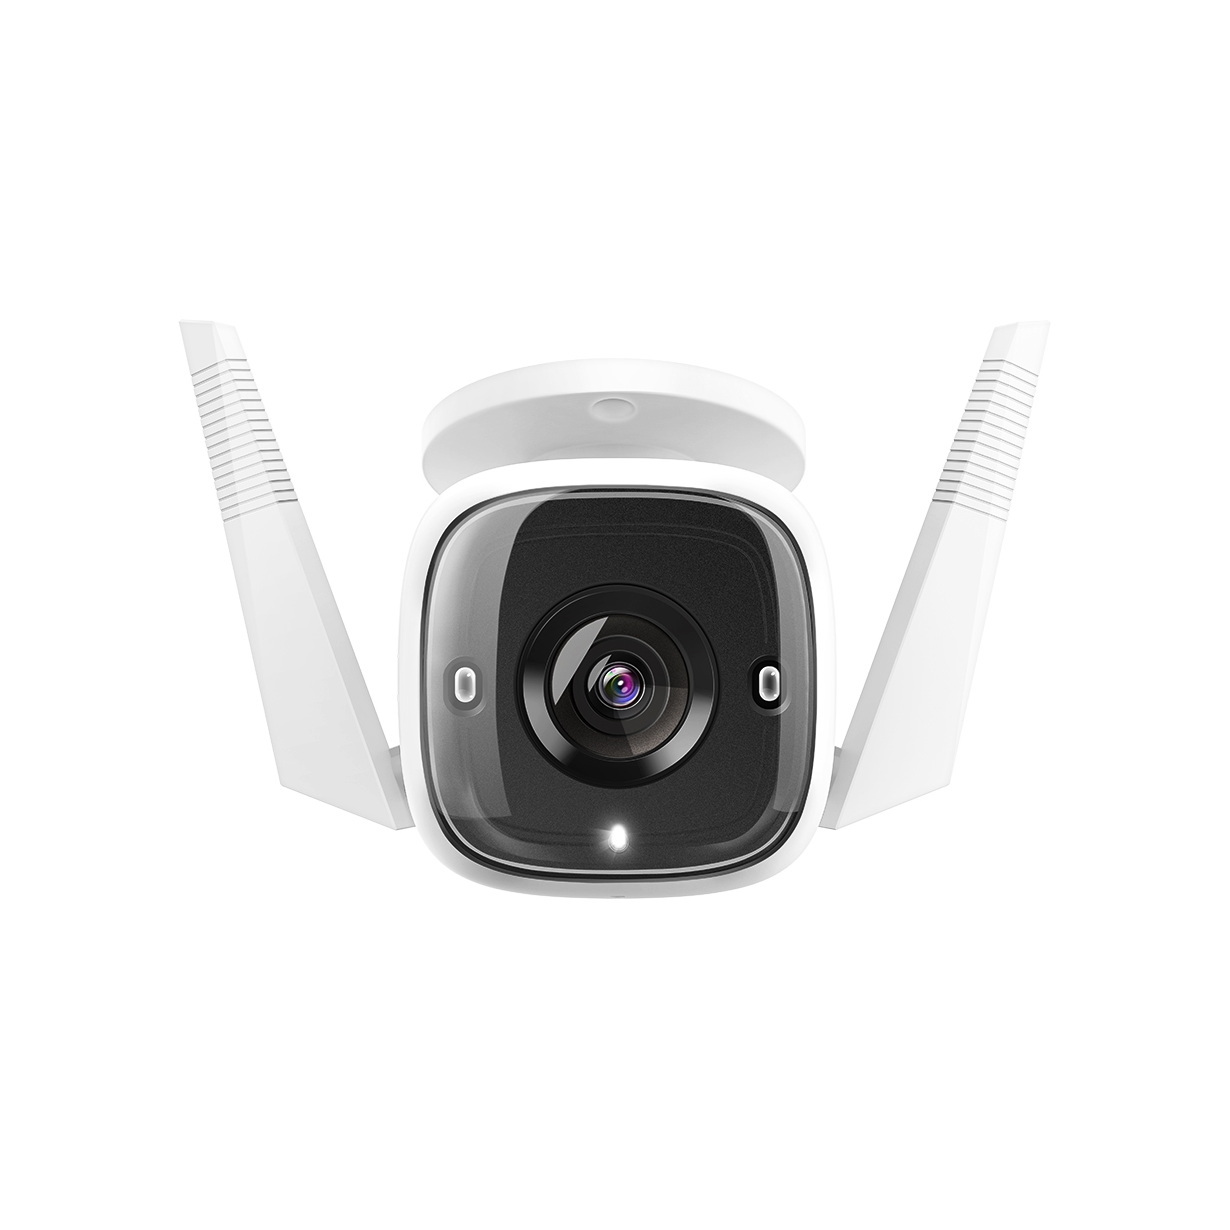 IP-камера TP-Link Tapo C310 White - купить в билайн - официальный магазин, цена на Мегамаркет